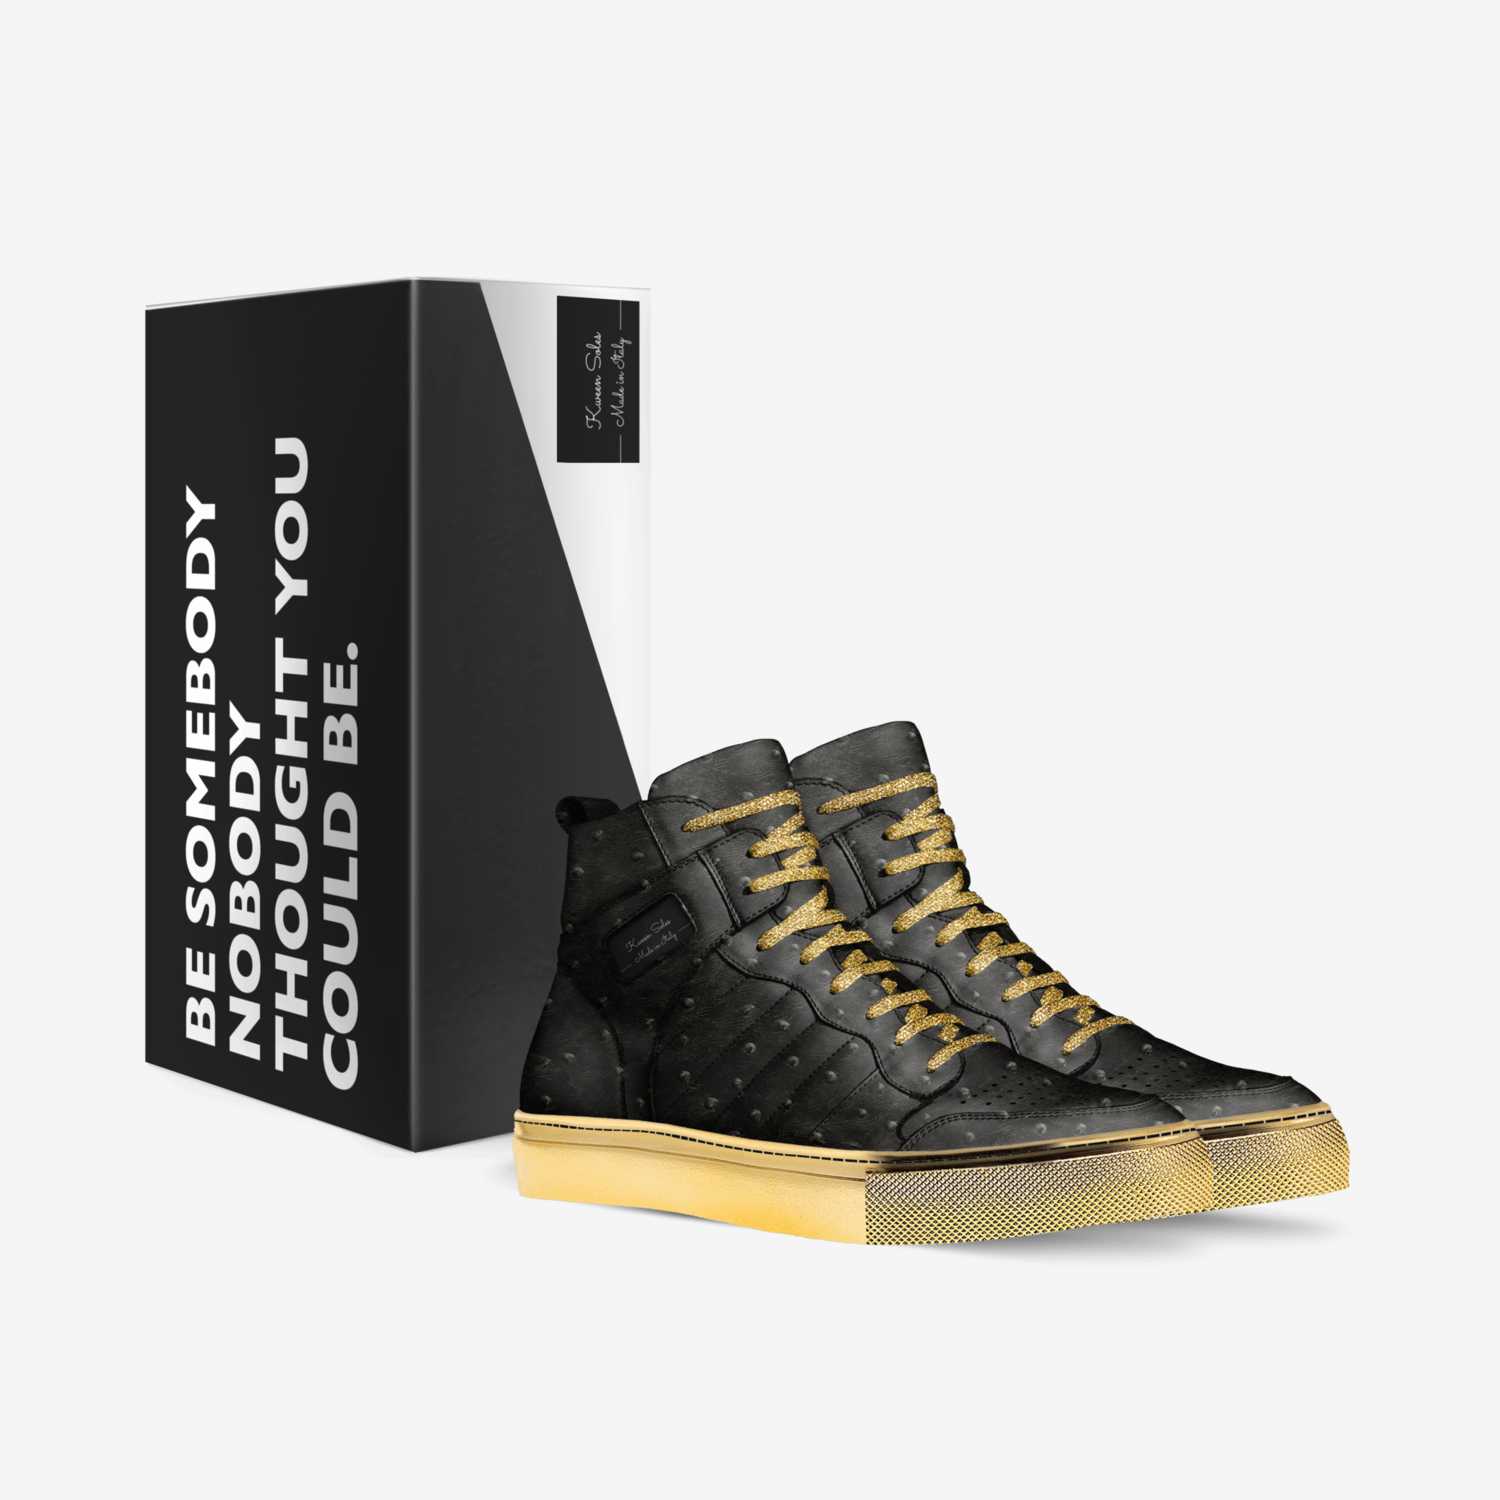 Kween Soles custom made in Italy shoes by Kween Sankofa-bey | Box view